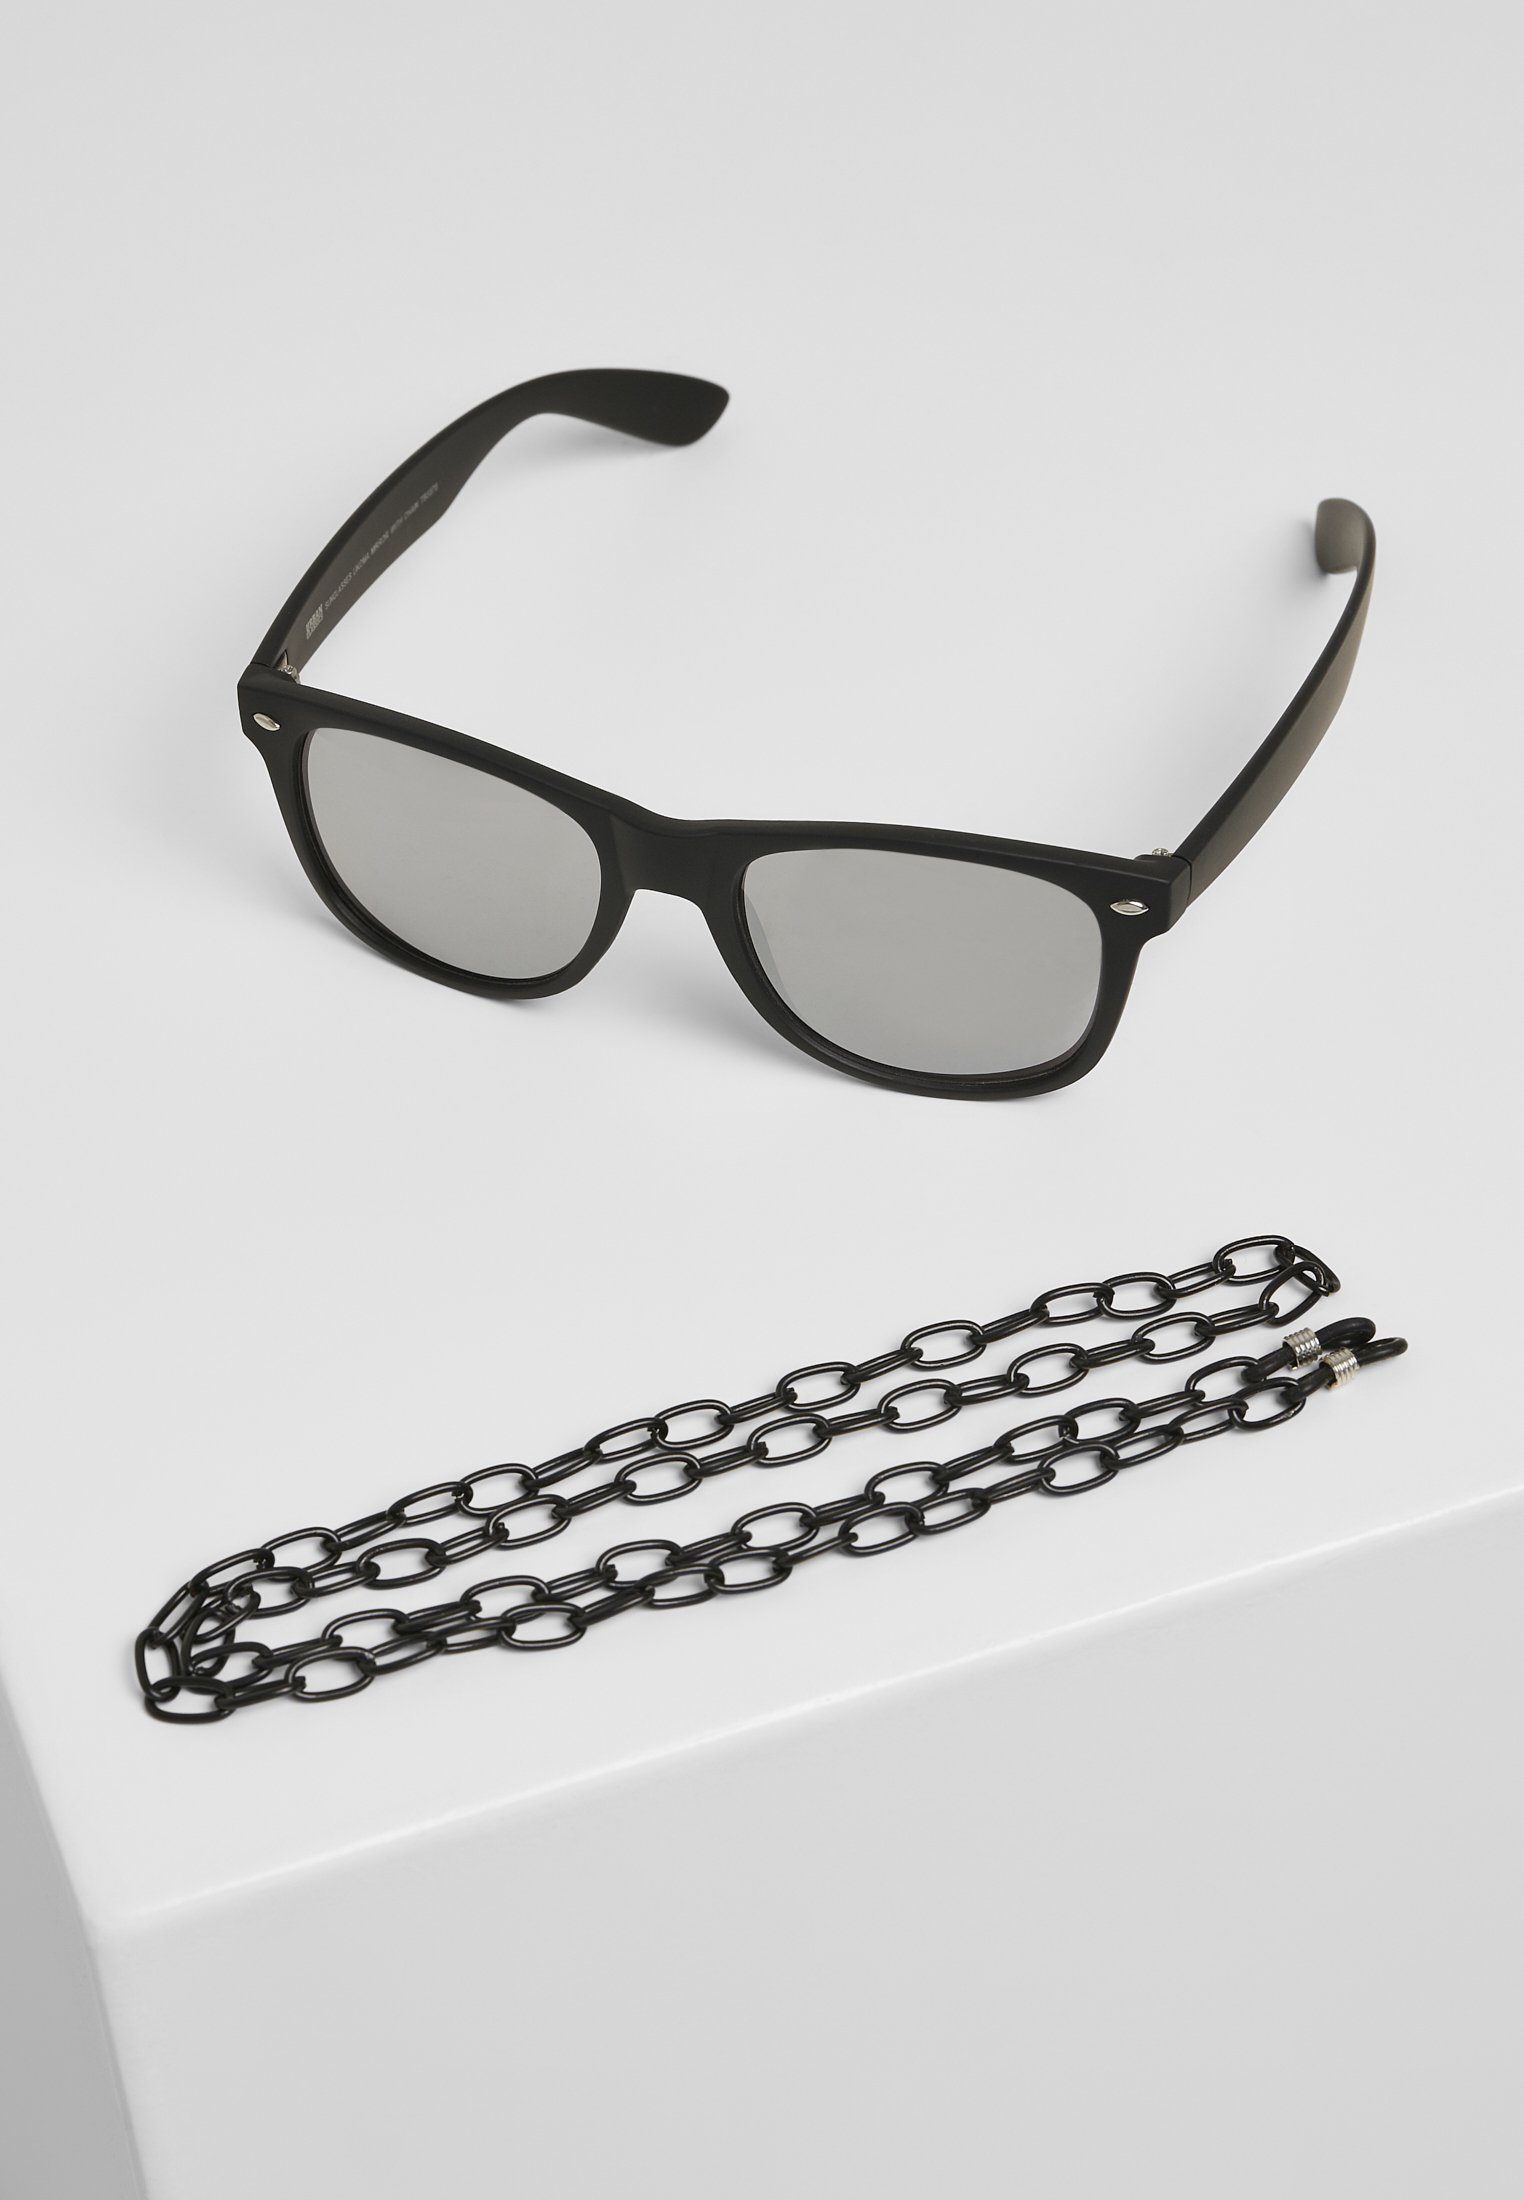 Likoma Mirror CLASSICS Chain Unisex With Sonnenbrille Sunglasses URBAN